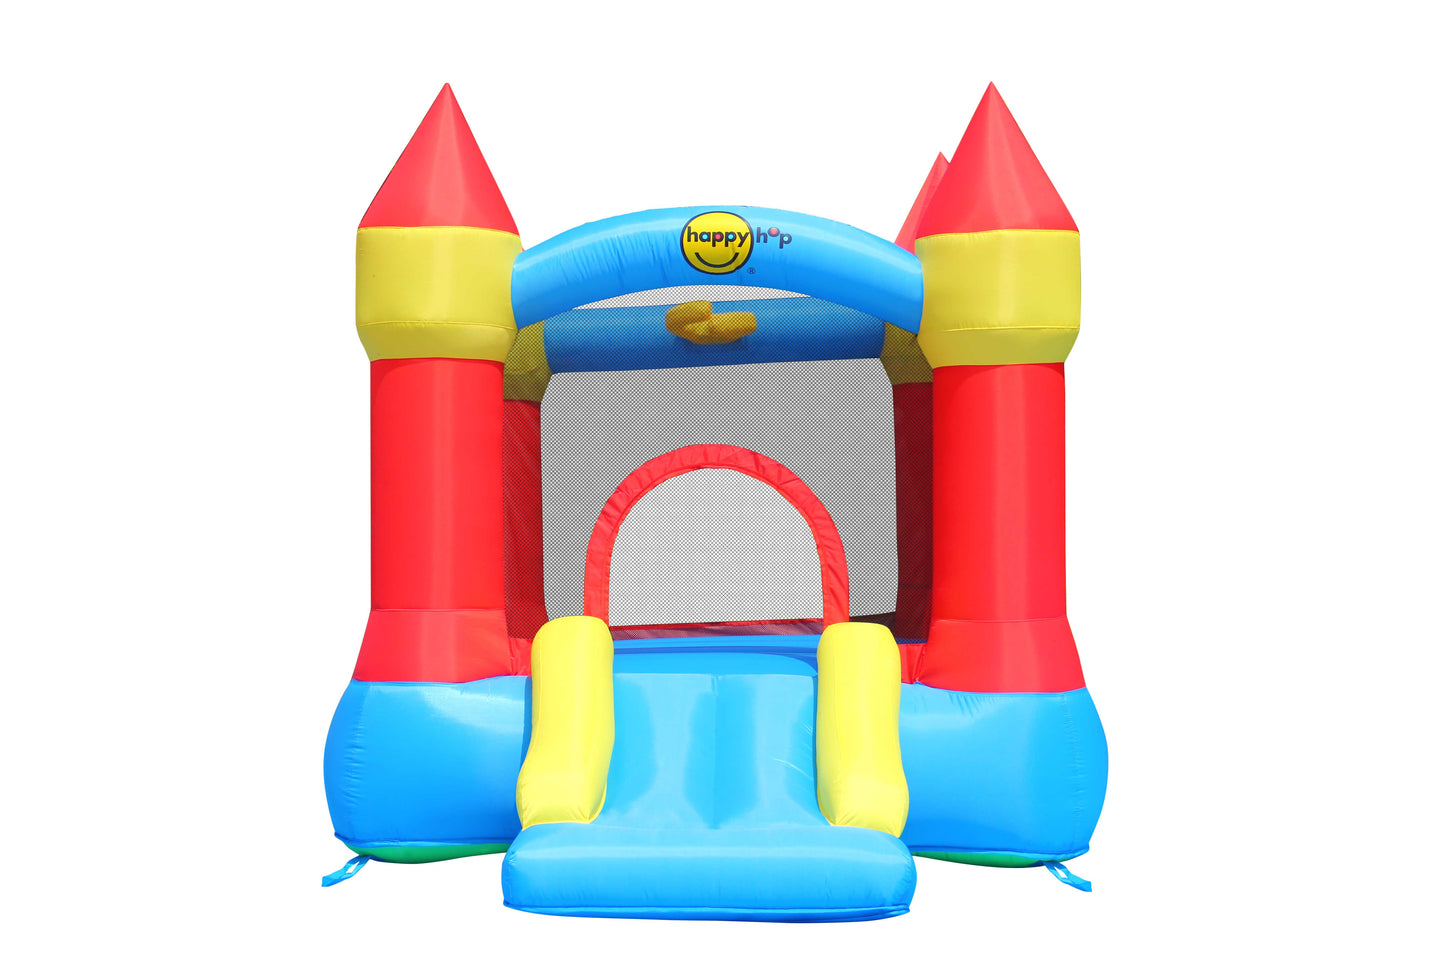 Jumping Castle with Slide & Hoop